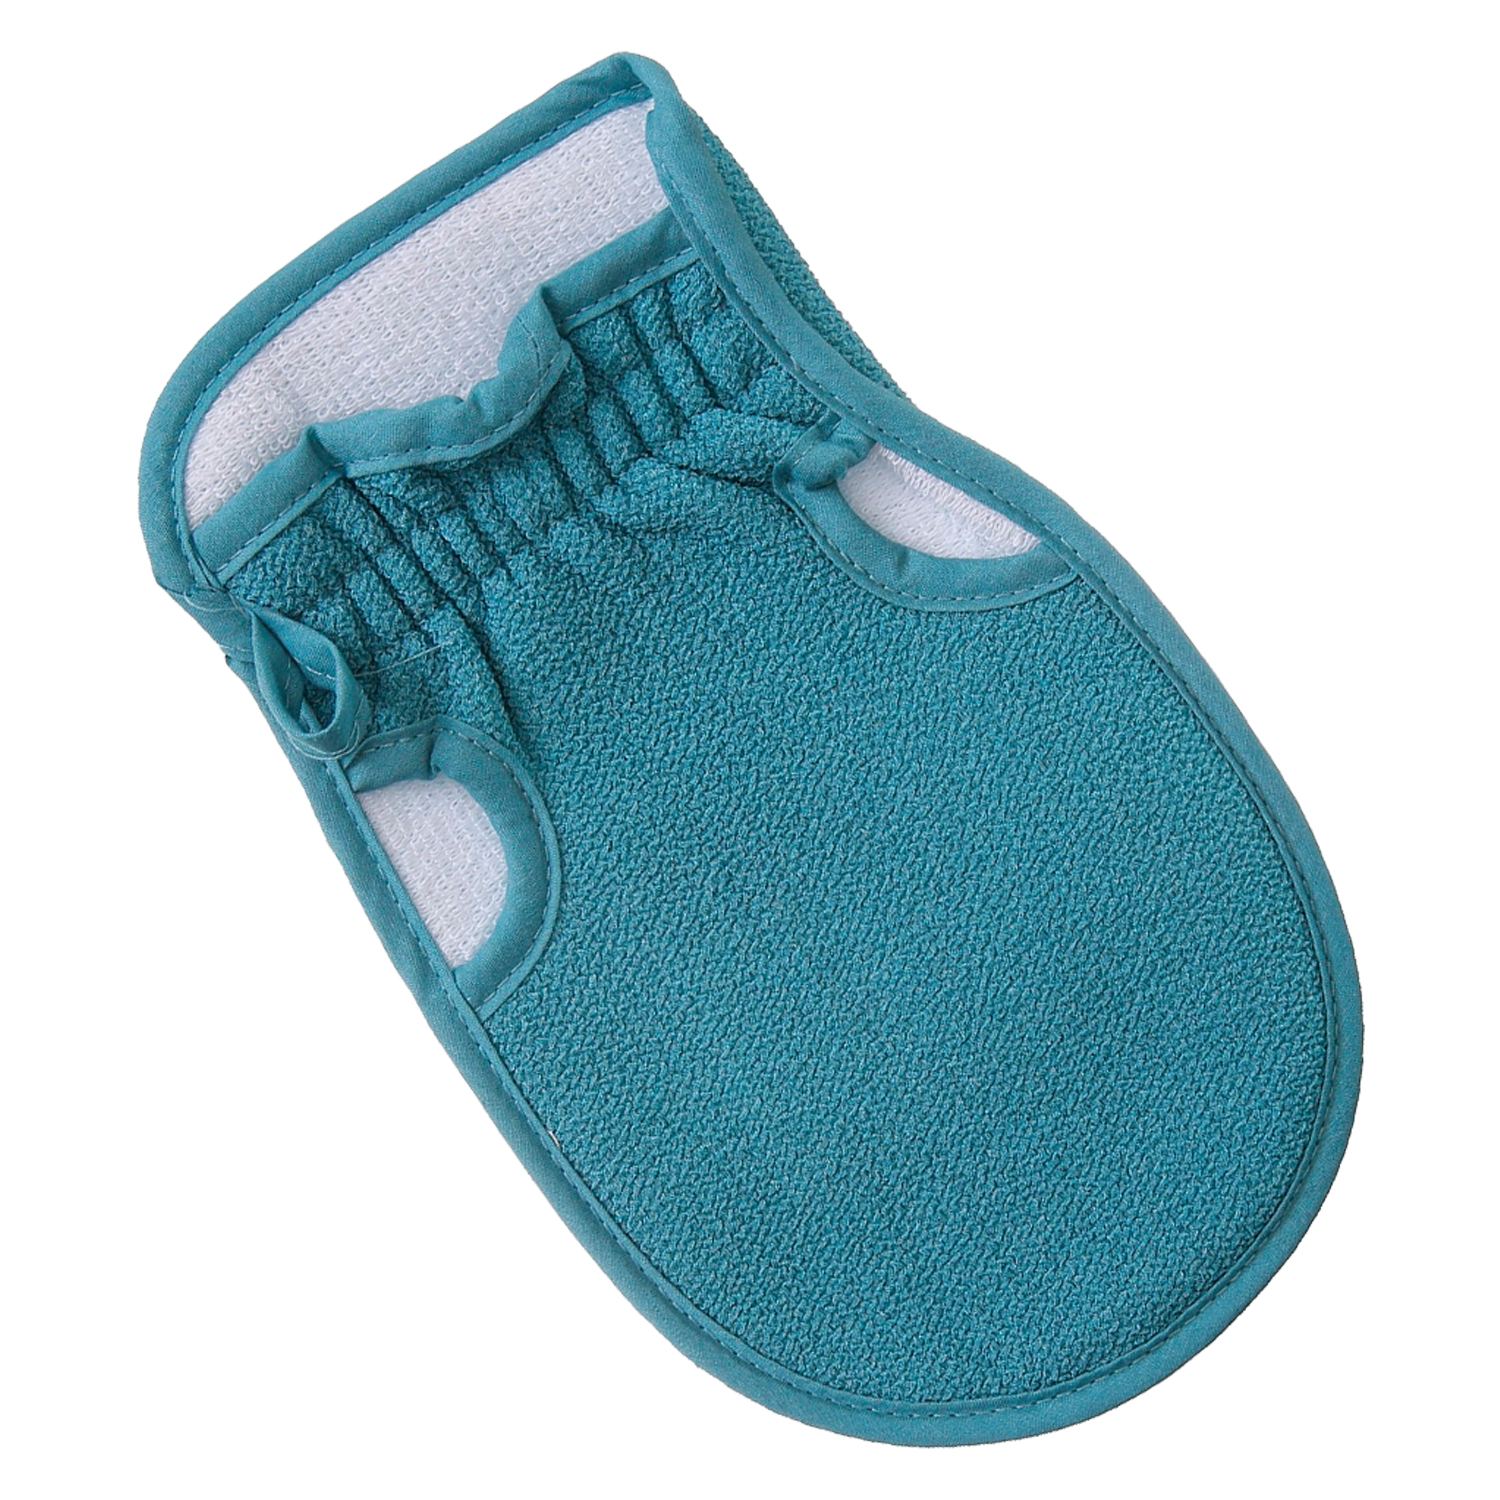 Мочалка-рукавица, VenusShape, цвет серо-голубой, 23х14 см